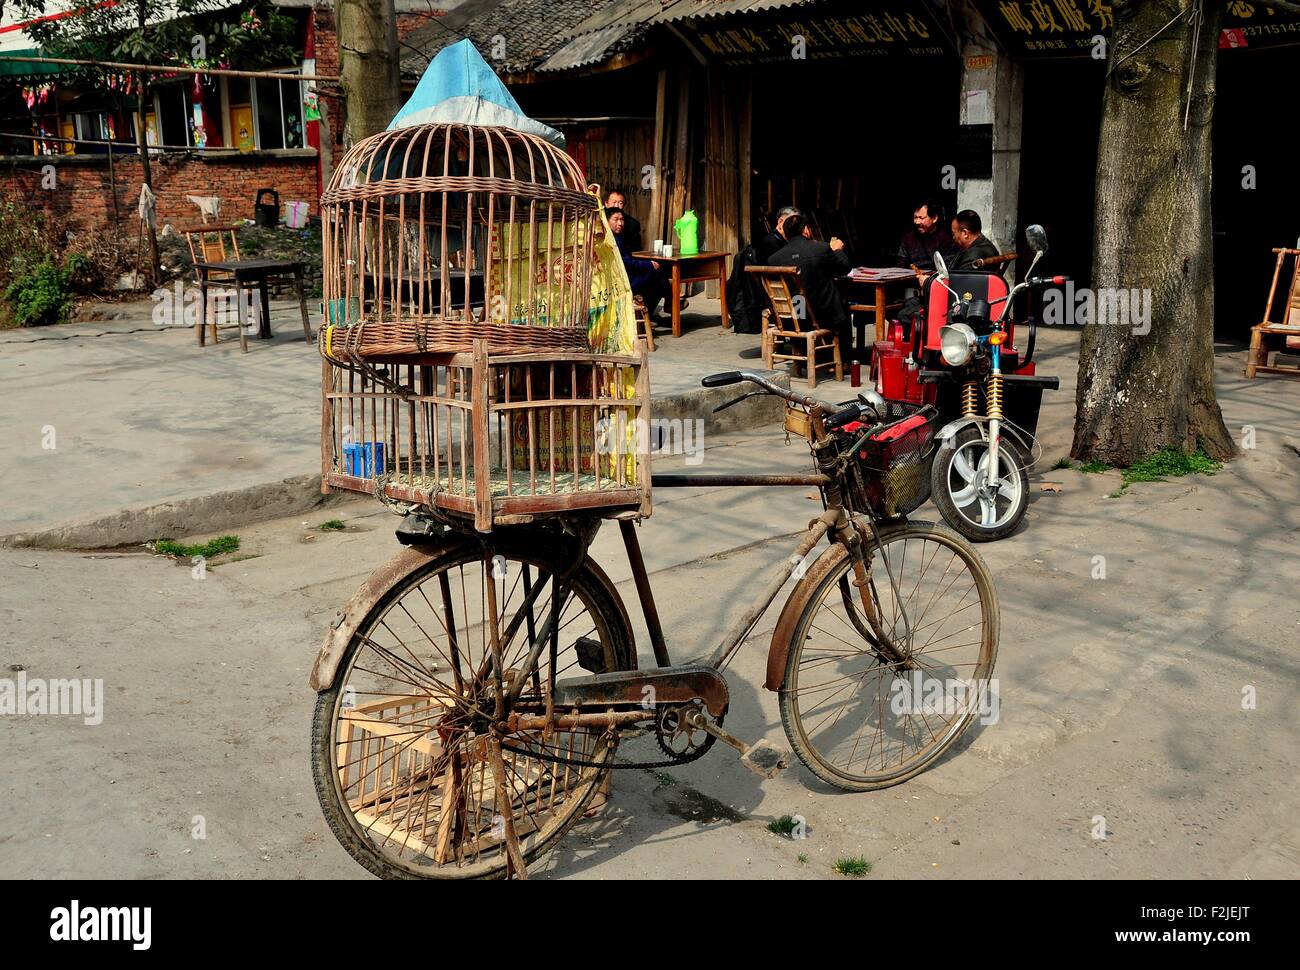 Long Feng, China: Bicicleta con dos jaulas para pájaros de madera atados en la espalda cerca de un grupo de hombres sentados en mesas Fotografía de stock - Alamy